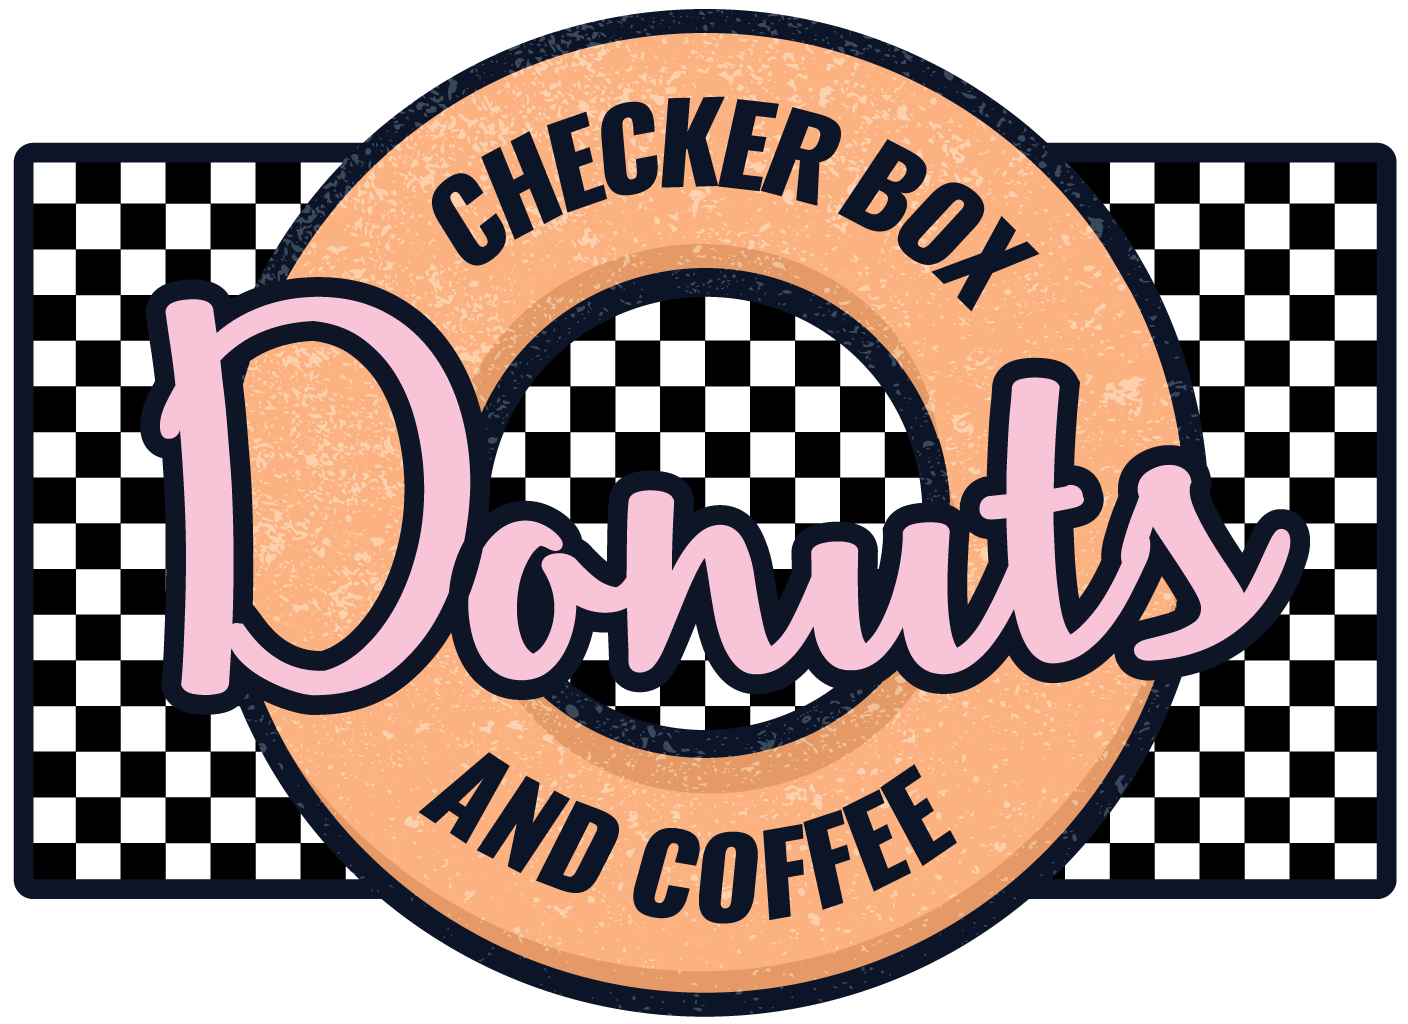 Checker Box Donuts and Coffee 